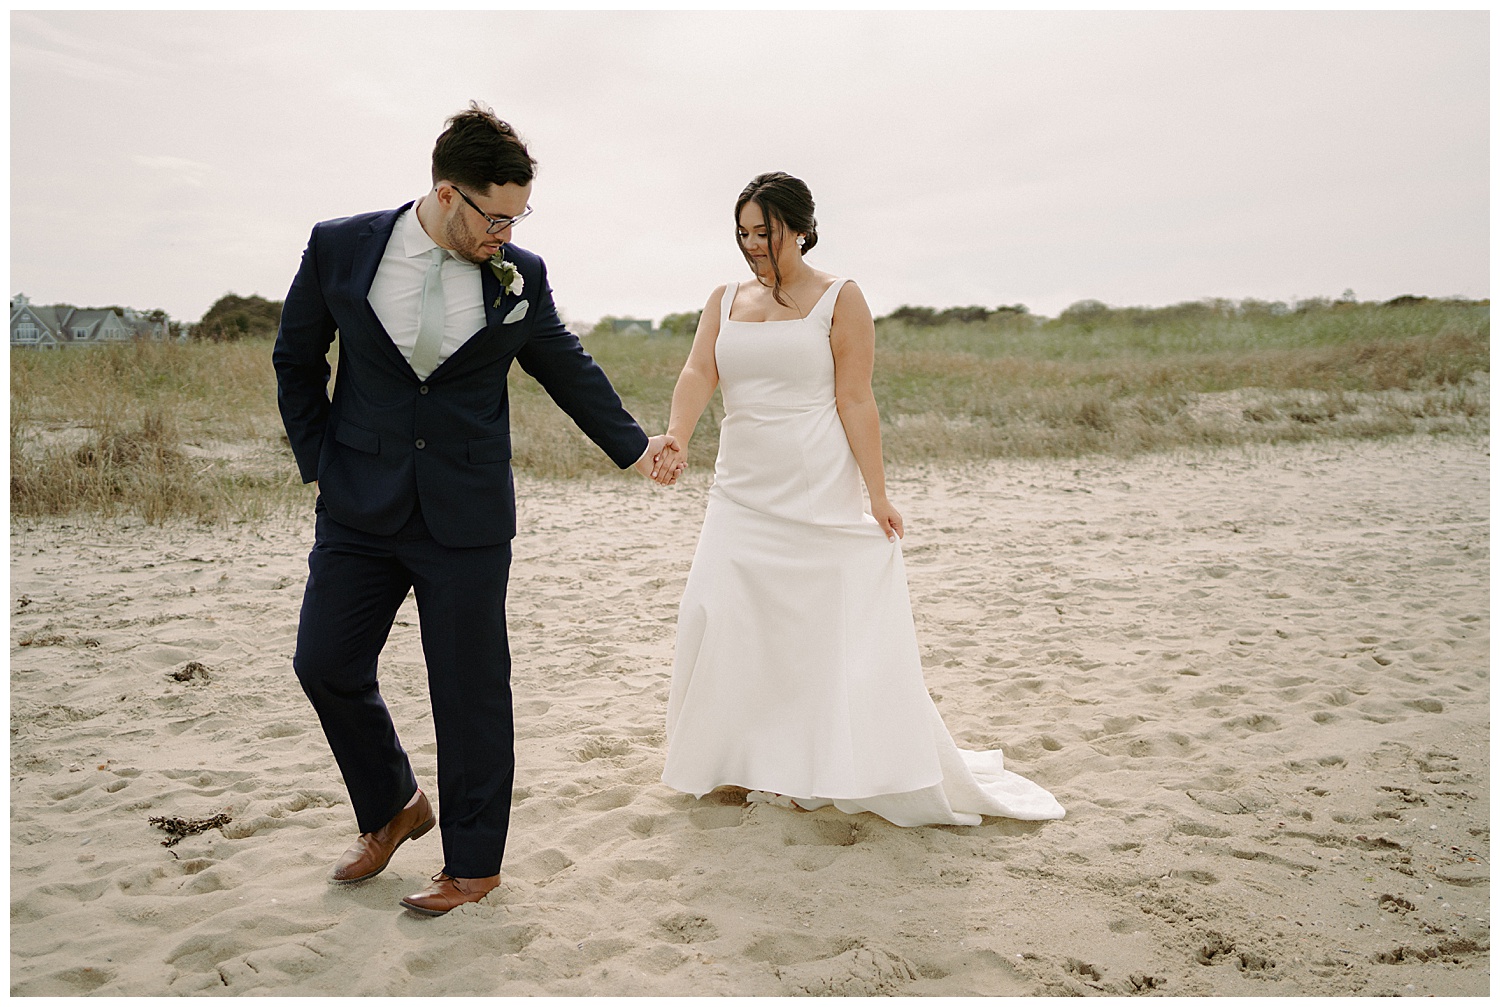 Groom leading bride on sandy beach